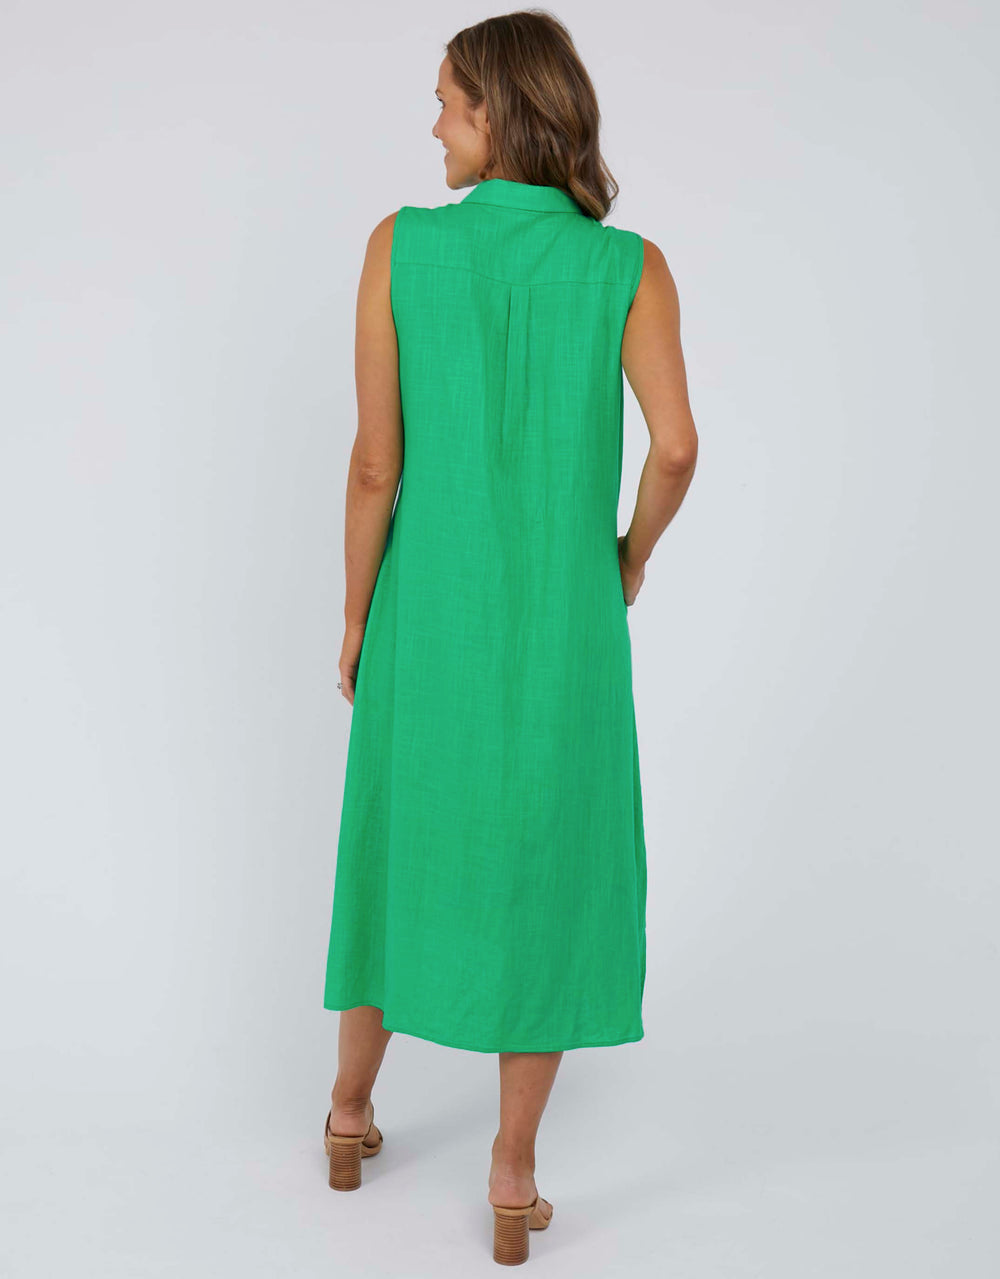 elm-cara-sleeveless-shirt-dress-bright-green-womens-clothing